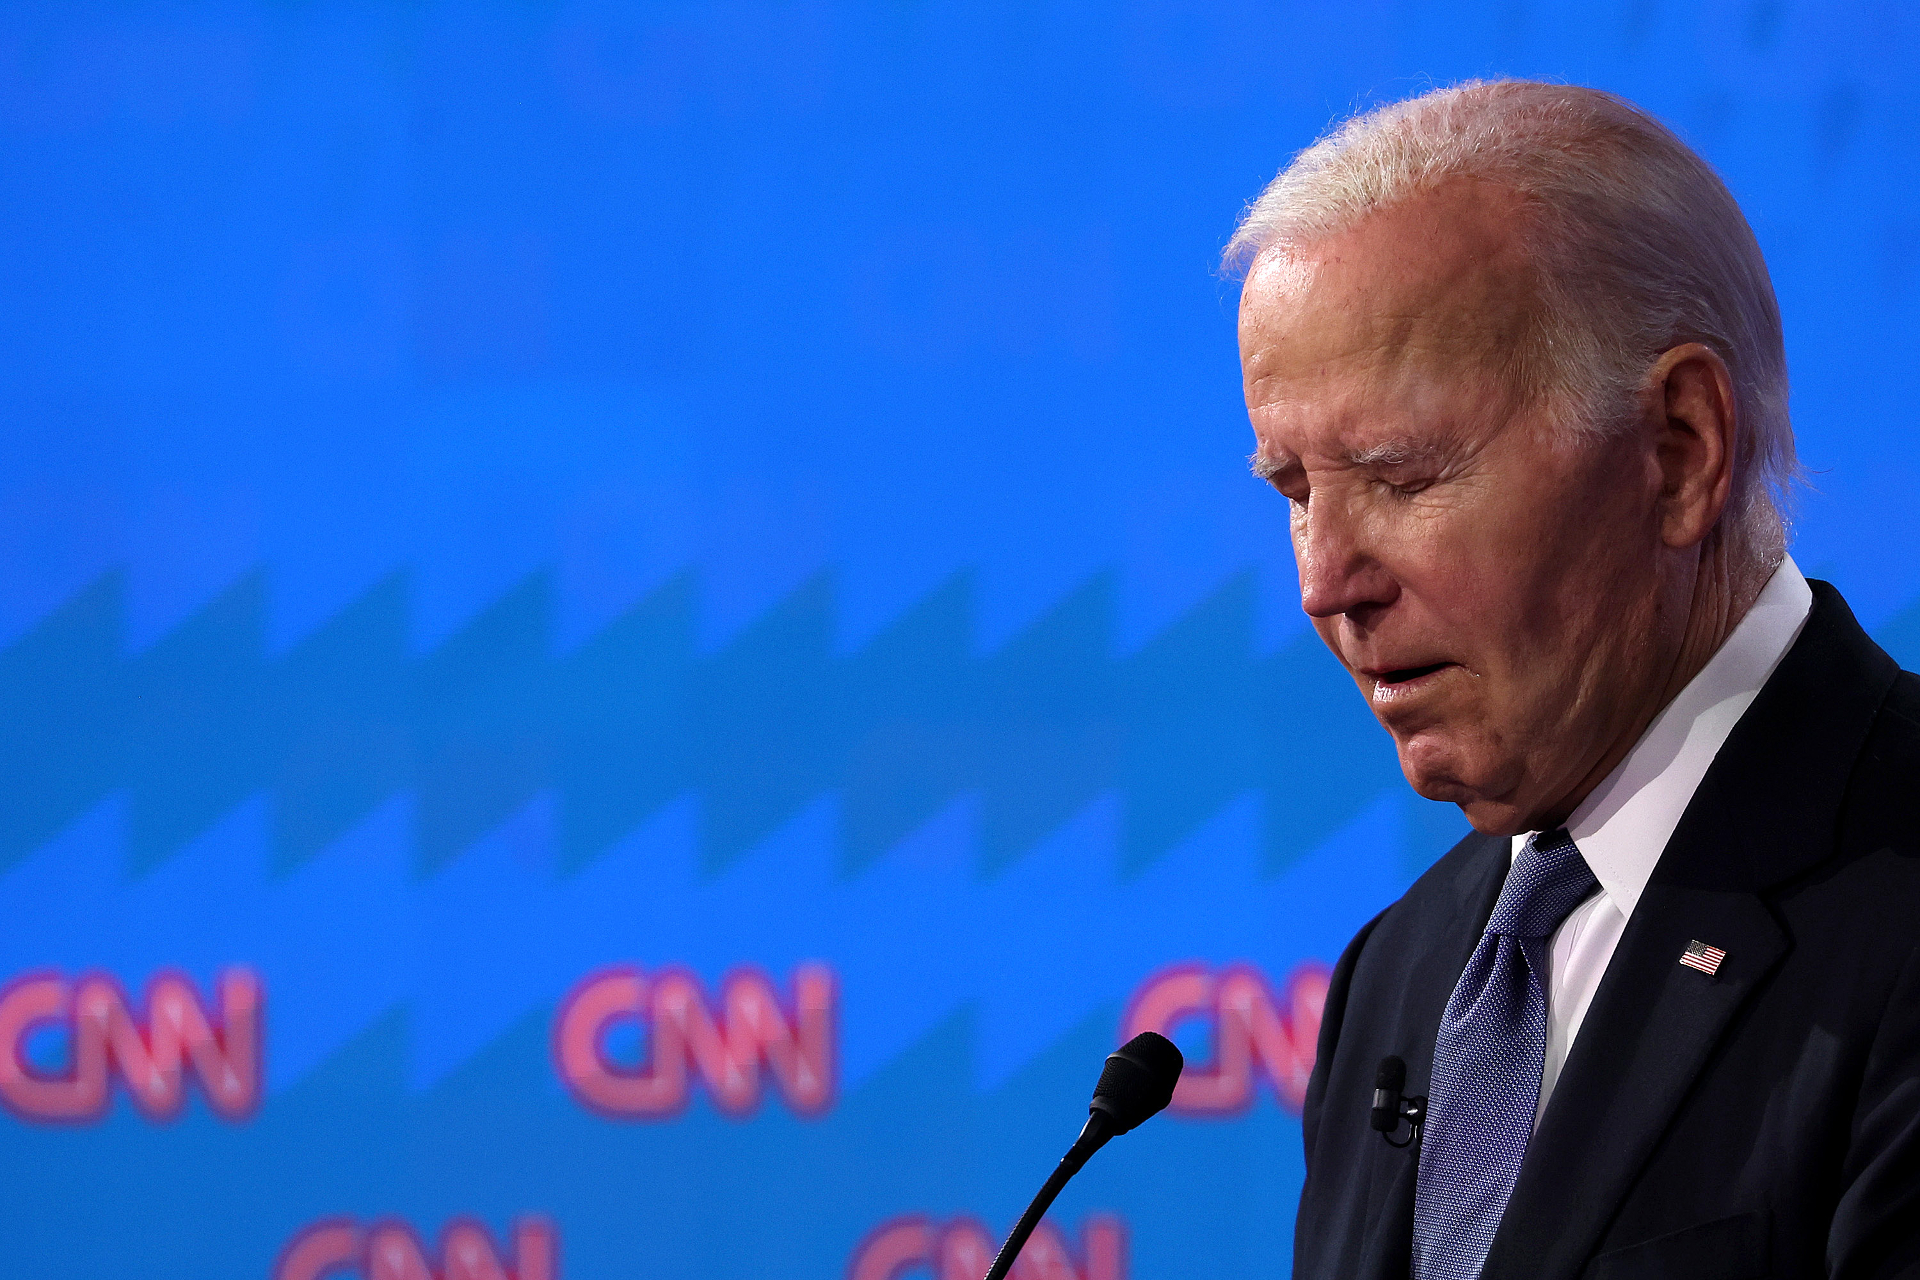 Joe's gotta go: Top Democrats pressure Biden to drop out after the debate debacle